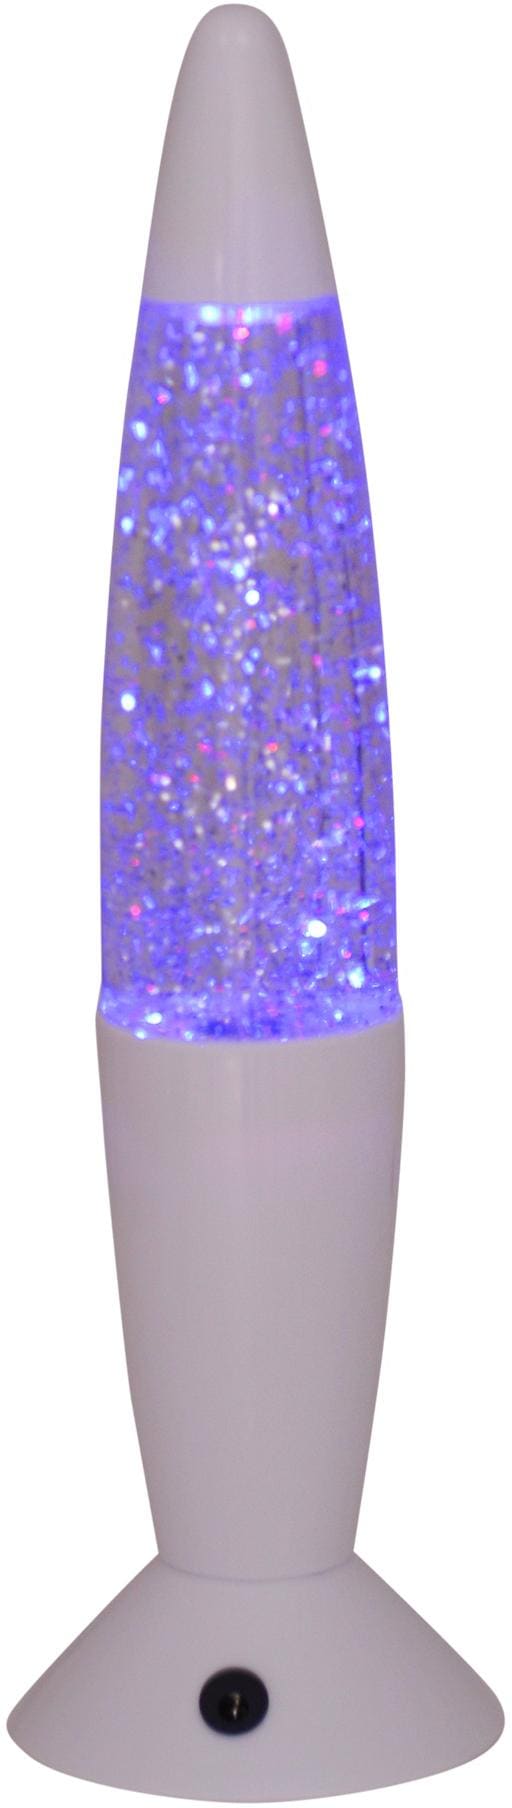 näve LED Tischleuchte »GLITTER«, Leuchtmittel LED-Board | LED fest integriert, Material: Metall/Kunststoff, Farbe: bunt, Ein- /Ausschalter